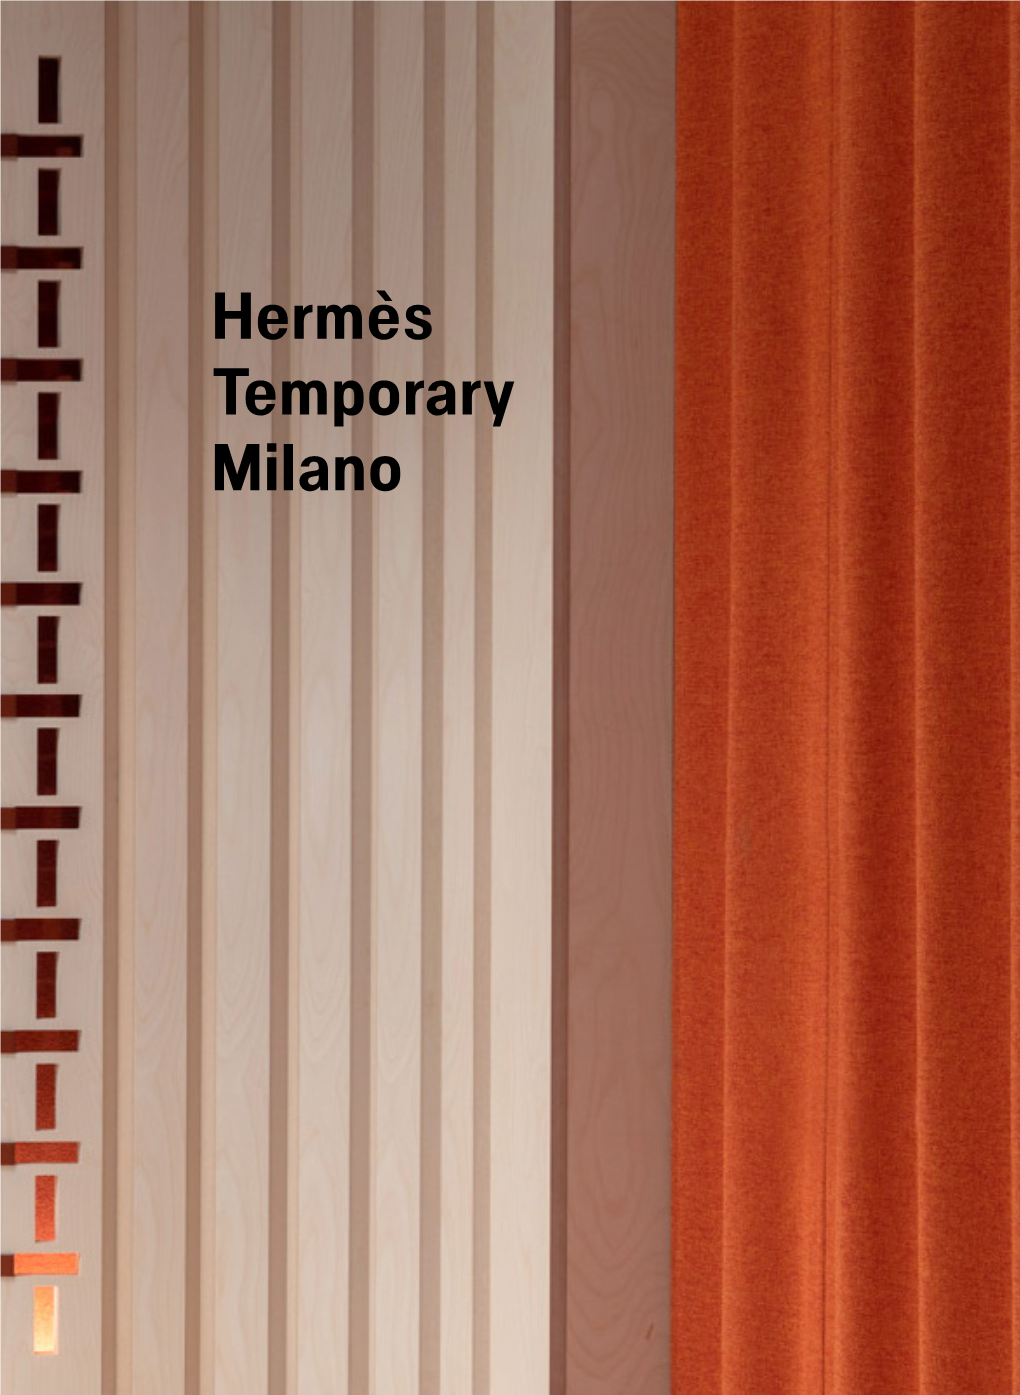 Hermès Temporary Milano Hermès Temporary Milano by Park Associati